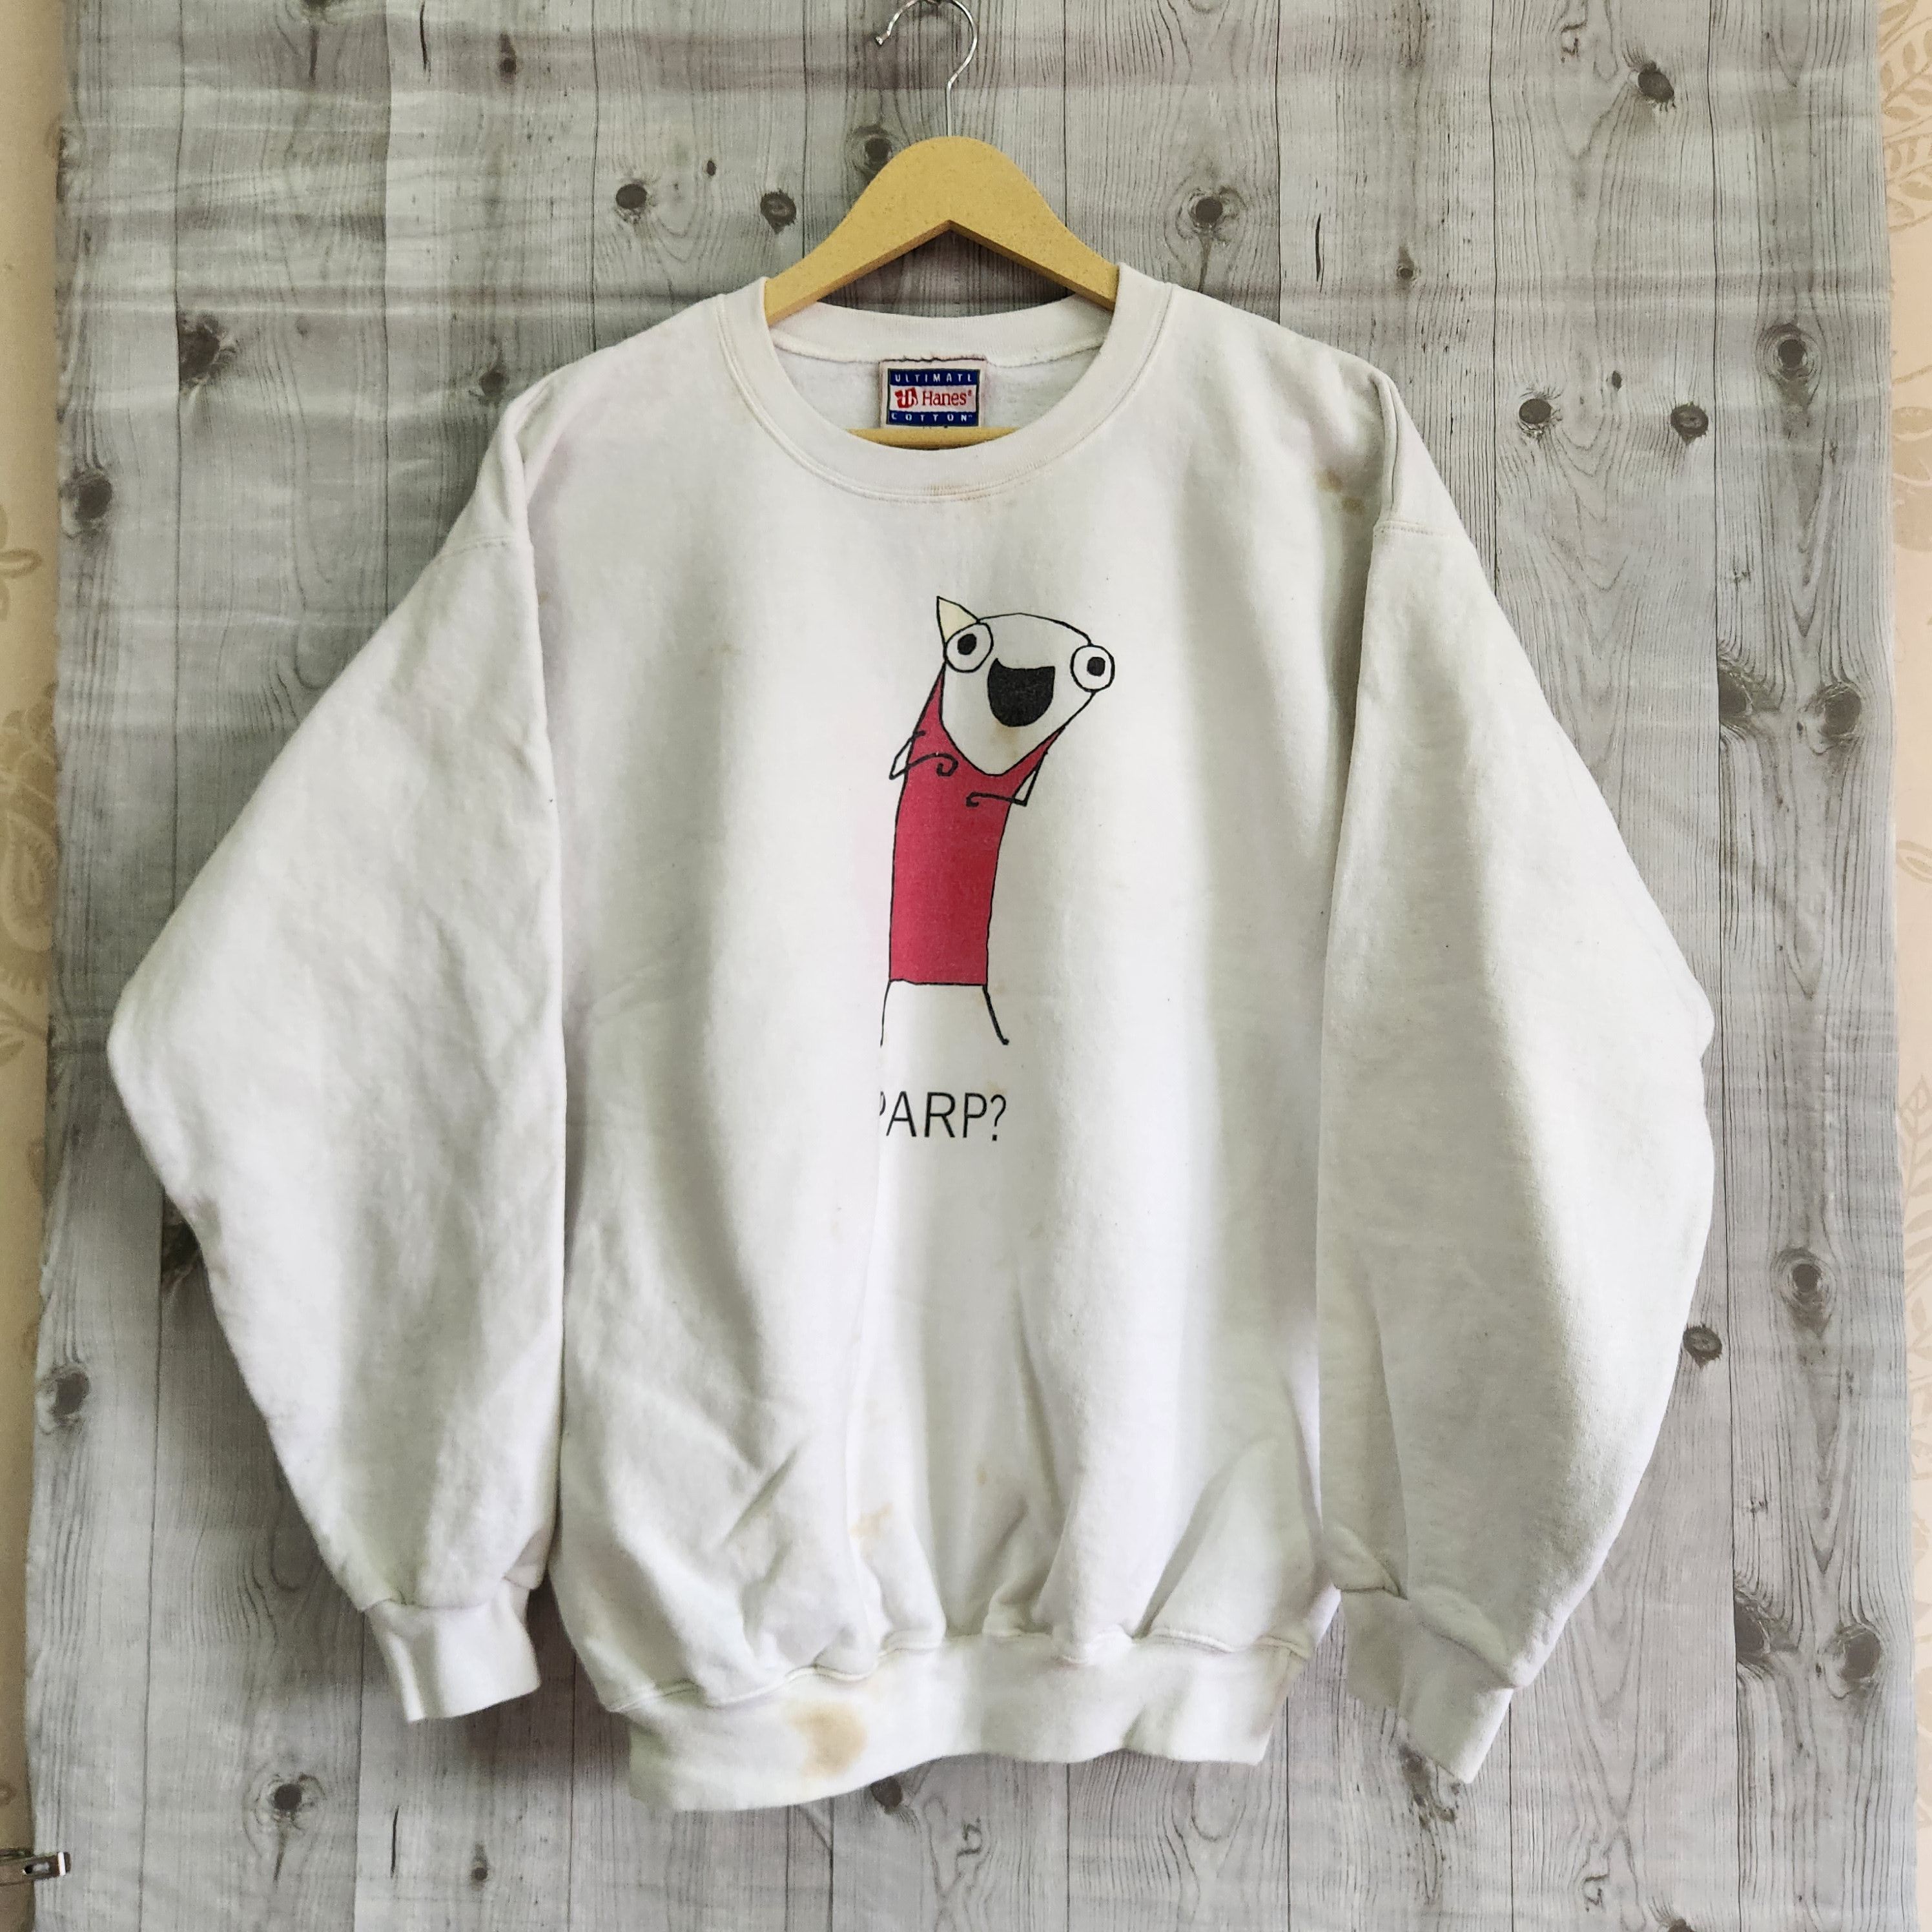 Parp Vintage Jumper Sweater Hanes 1990s - 1